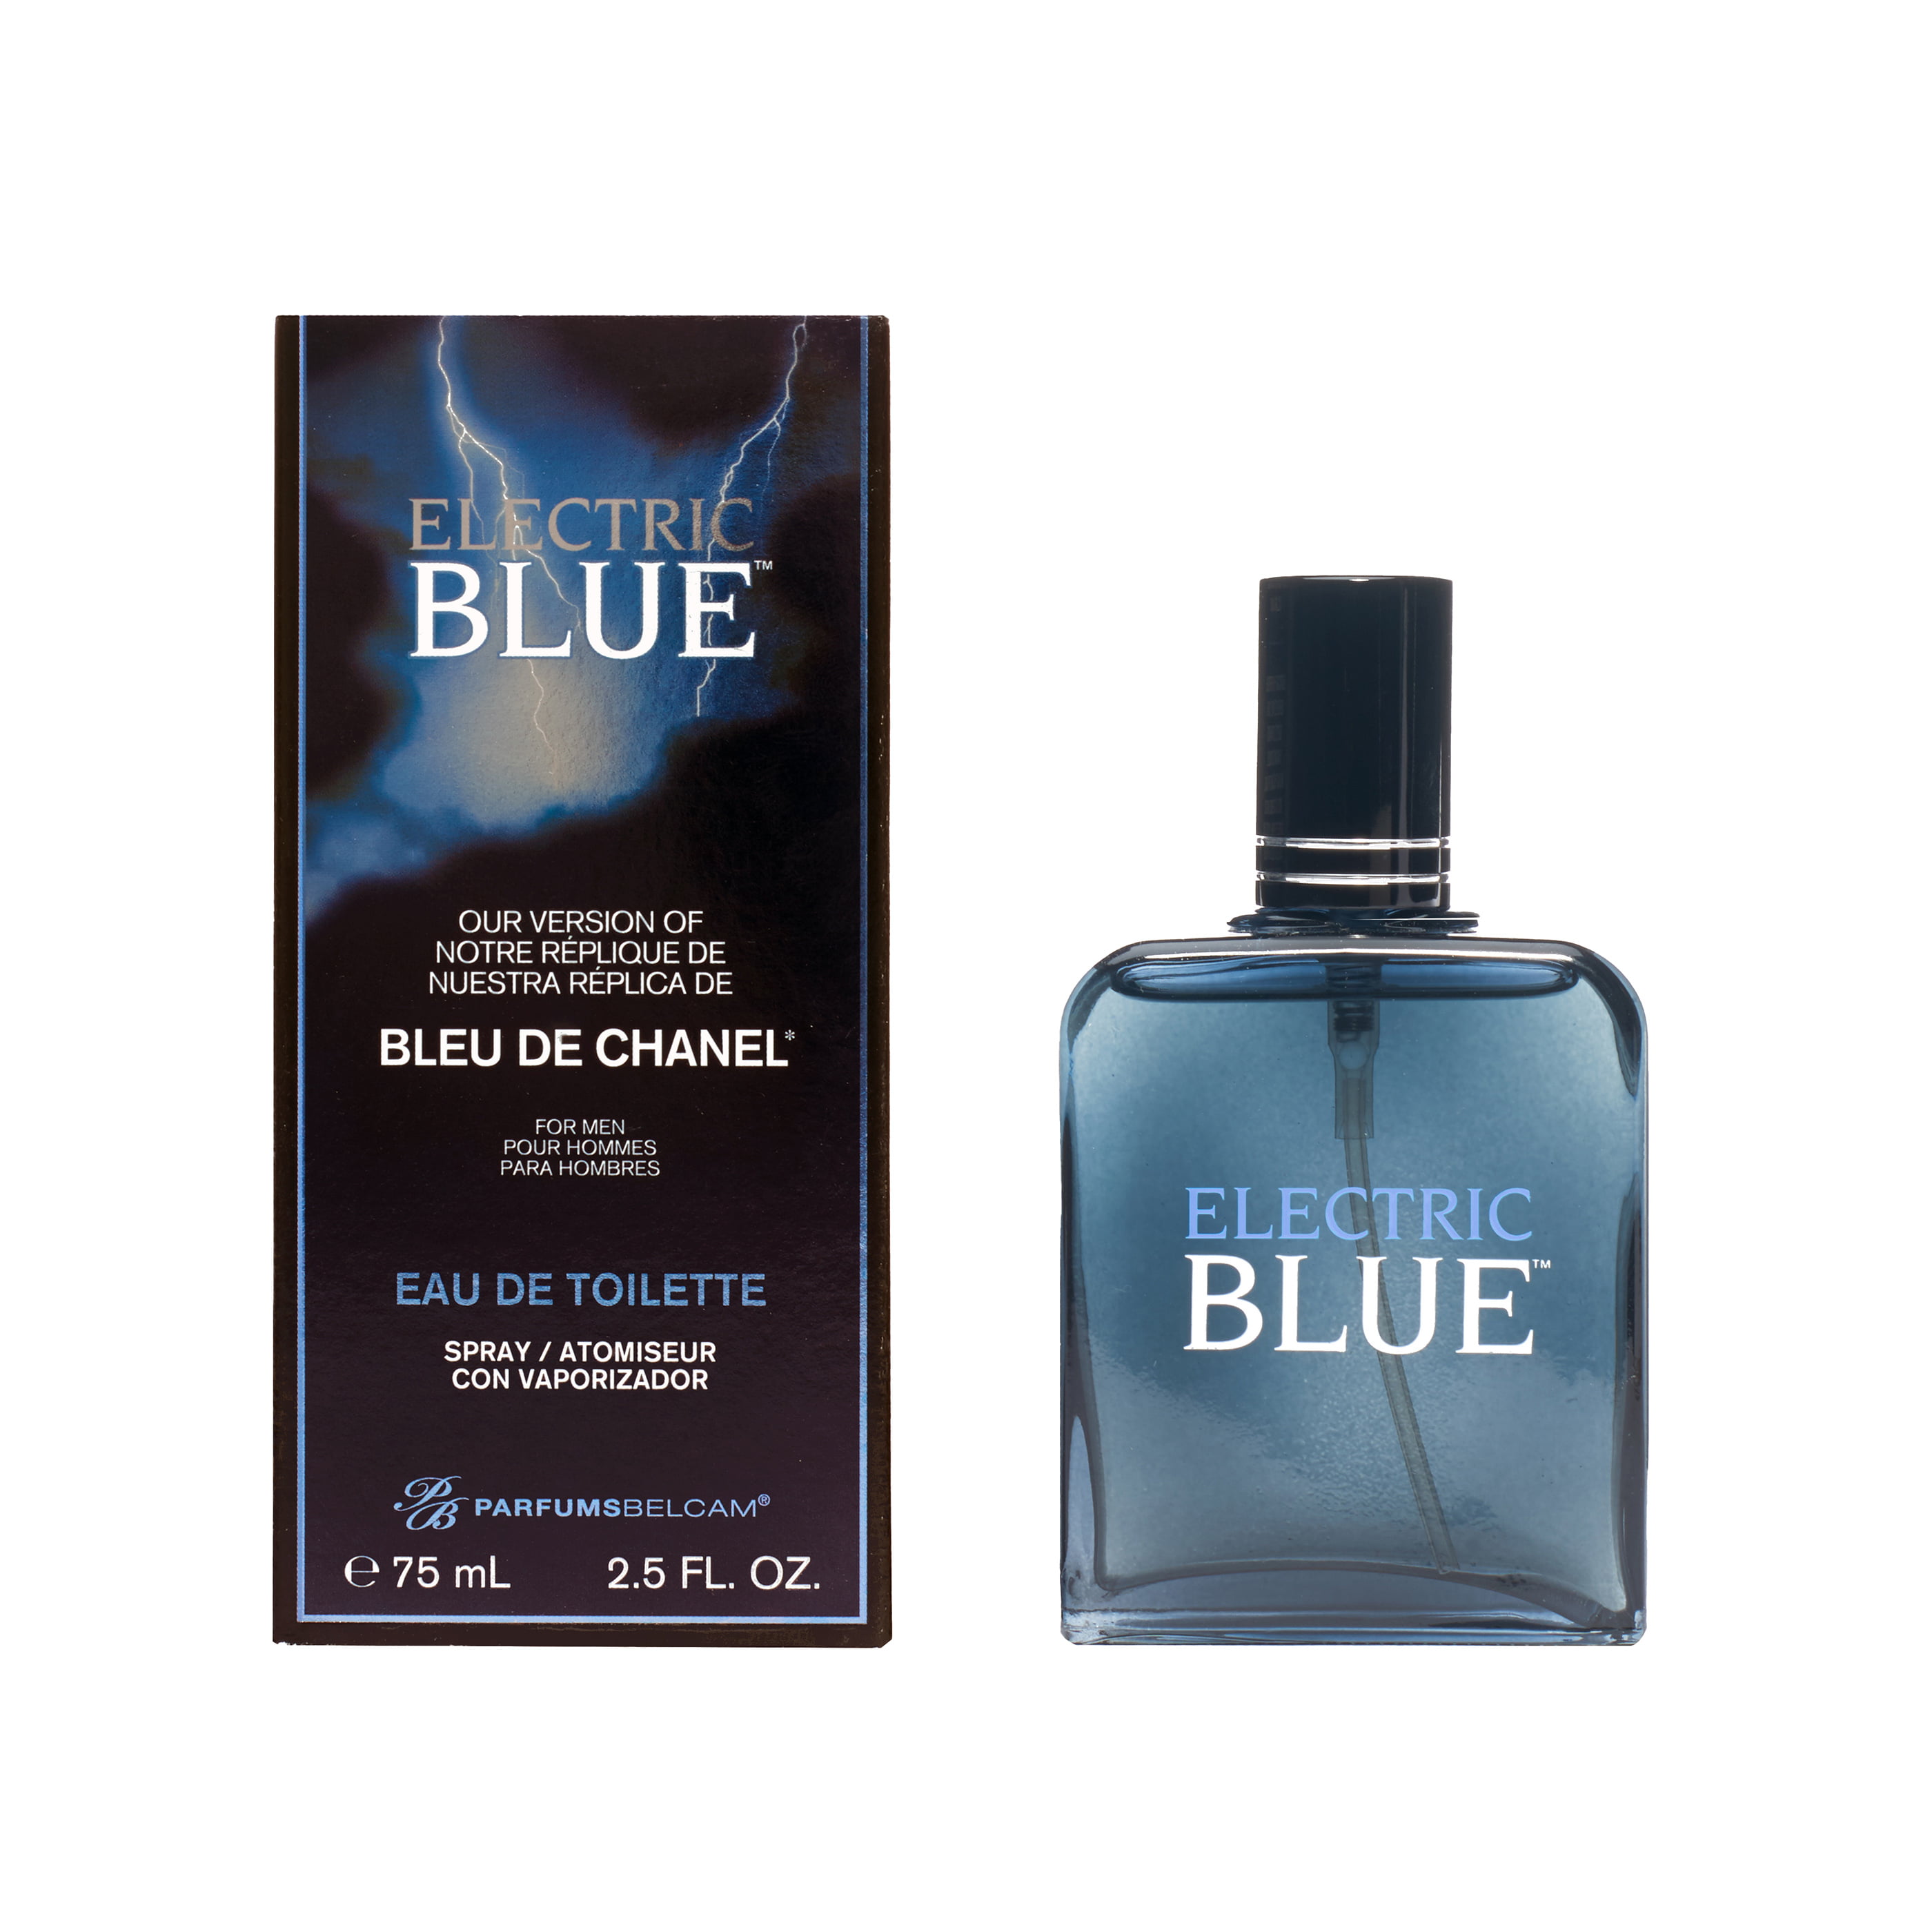 men's chanel bleu parfum